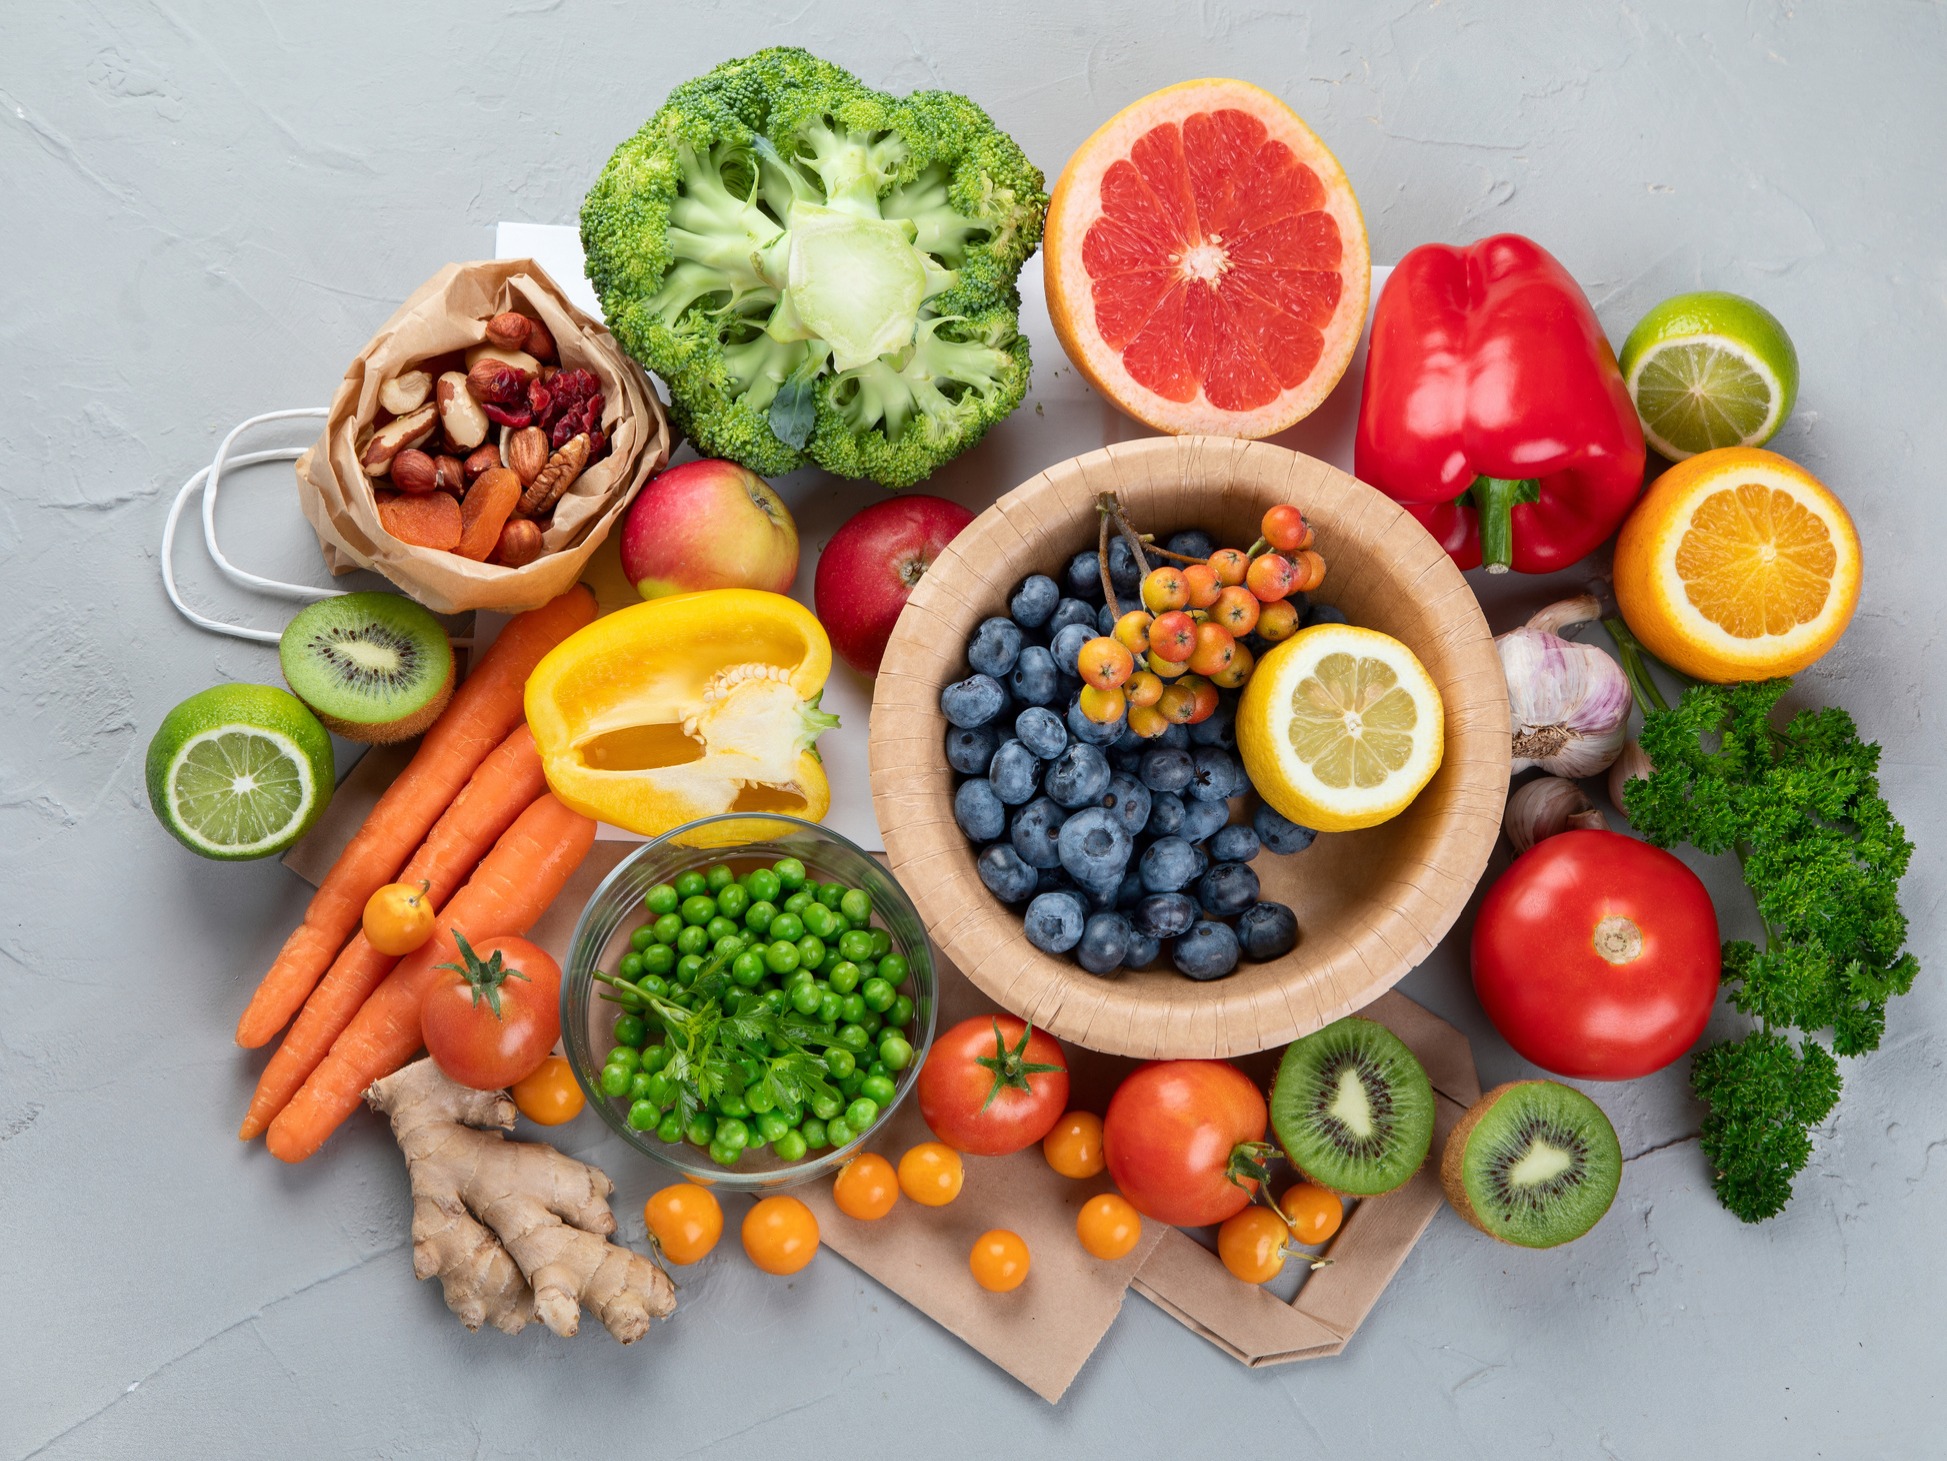 Alimentos ricos em vitamina C para incluir na dieta - Vital Âtman Blog